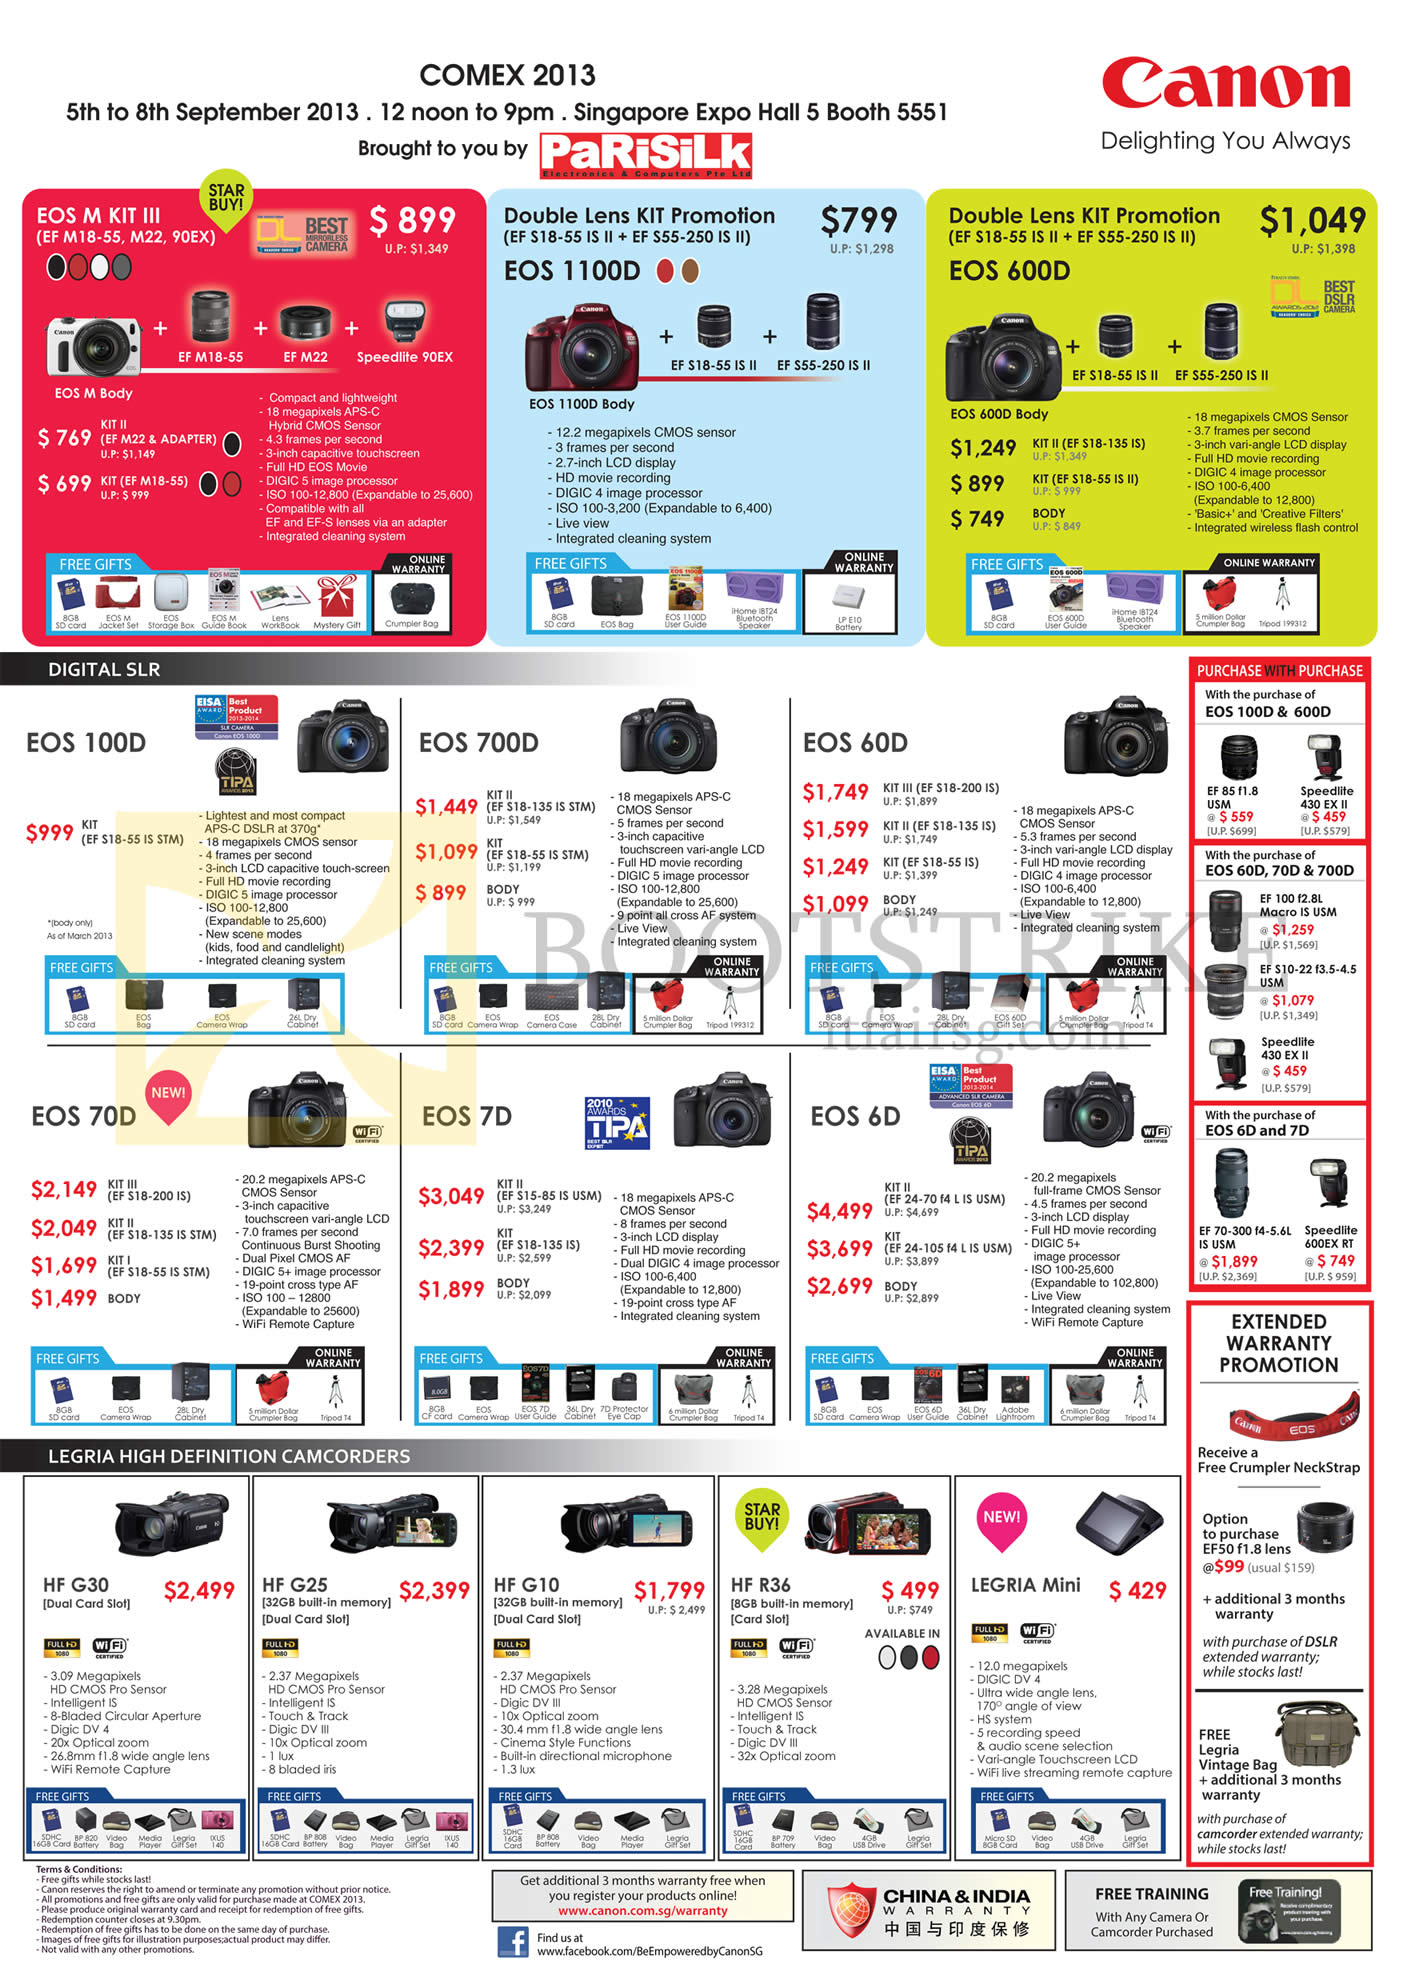 COMEX 2013 price list image brochure of Canon Digital Cameras DSLR EOS M, 1100D, 100D, 600D, 700D, 60D, 70D, 7D, 6D, Legria Camcorder HF G30 G25 G10 R36 Mini